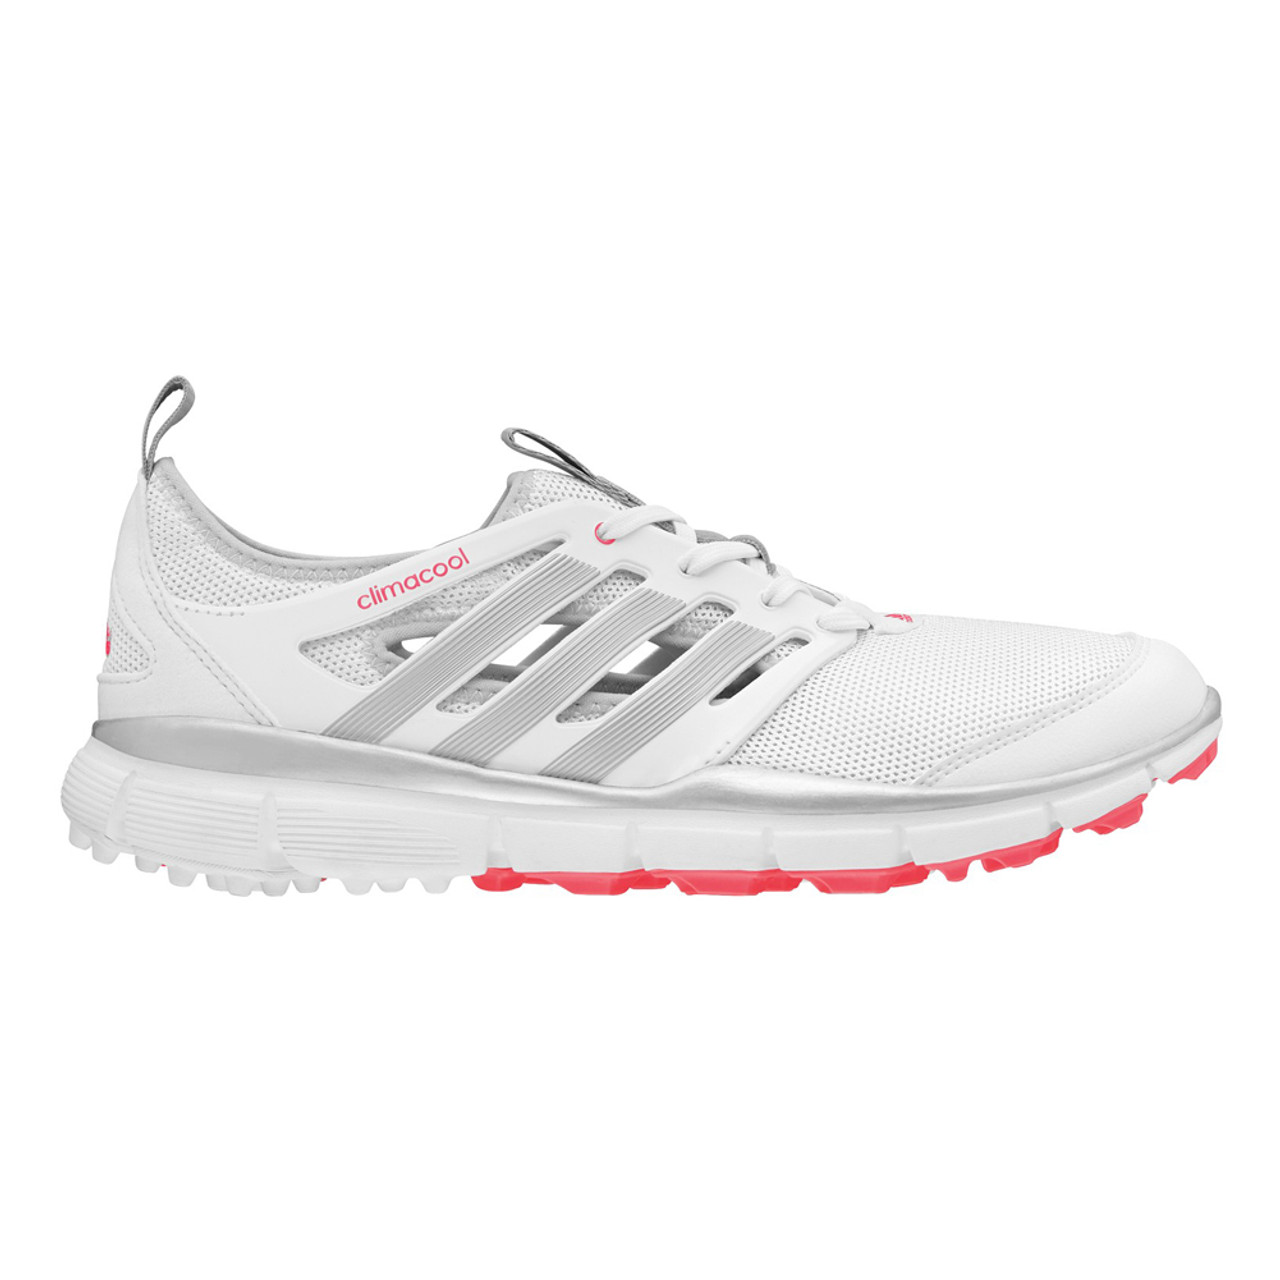 Adidas Women's Climacool II Golf Shoe White/Pink